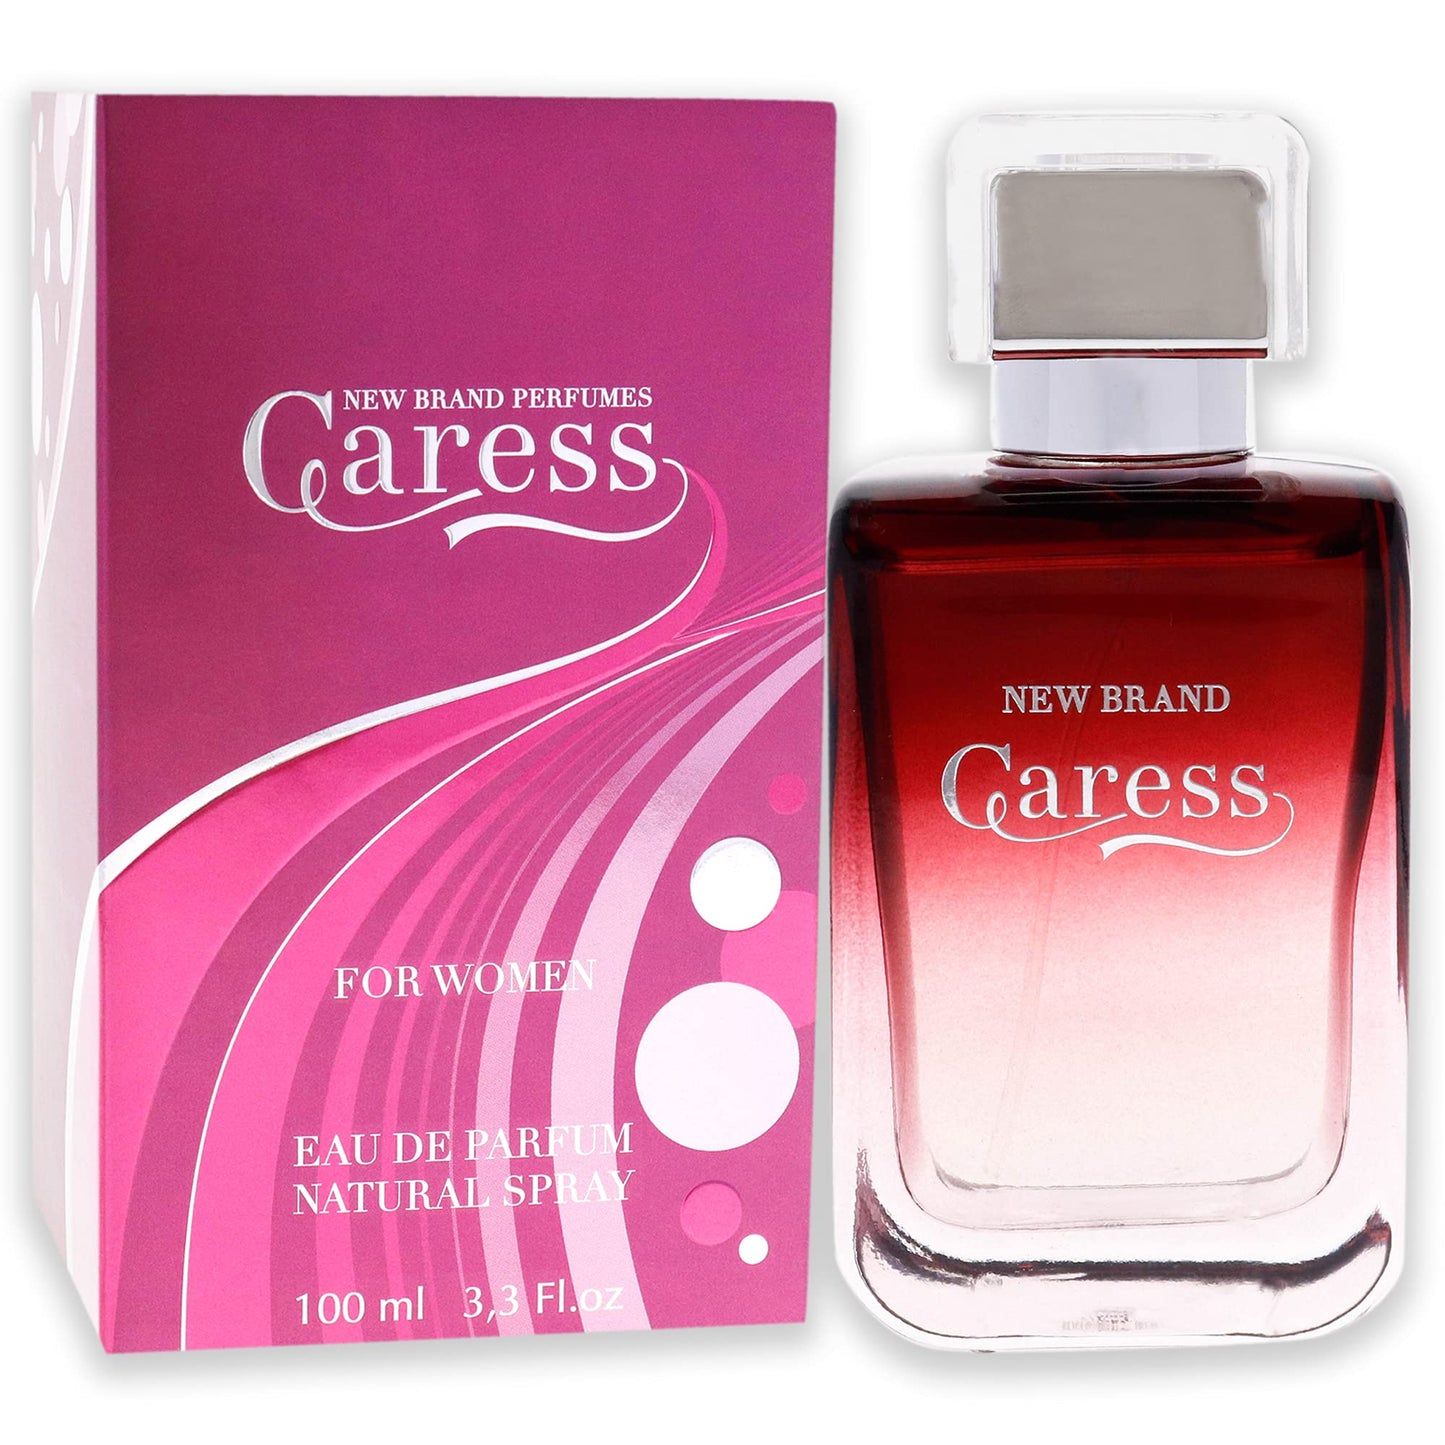 New Brand Caress 100ml Eau De Parfum